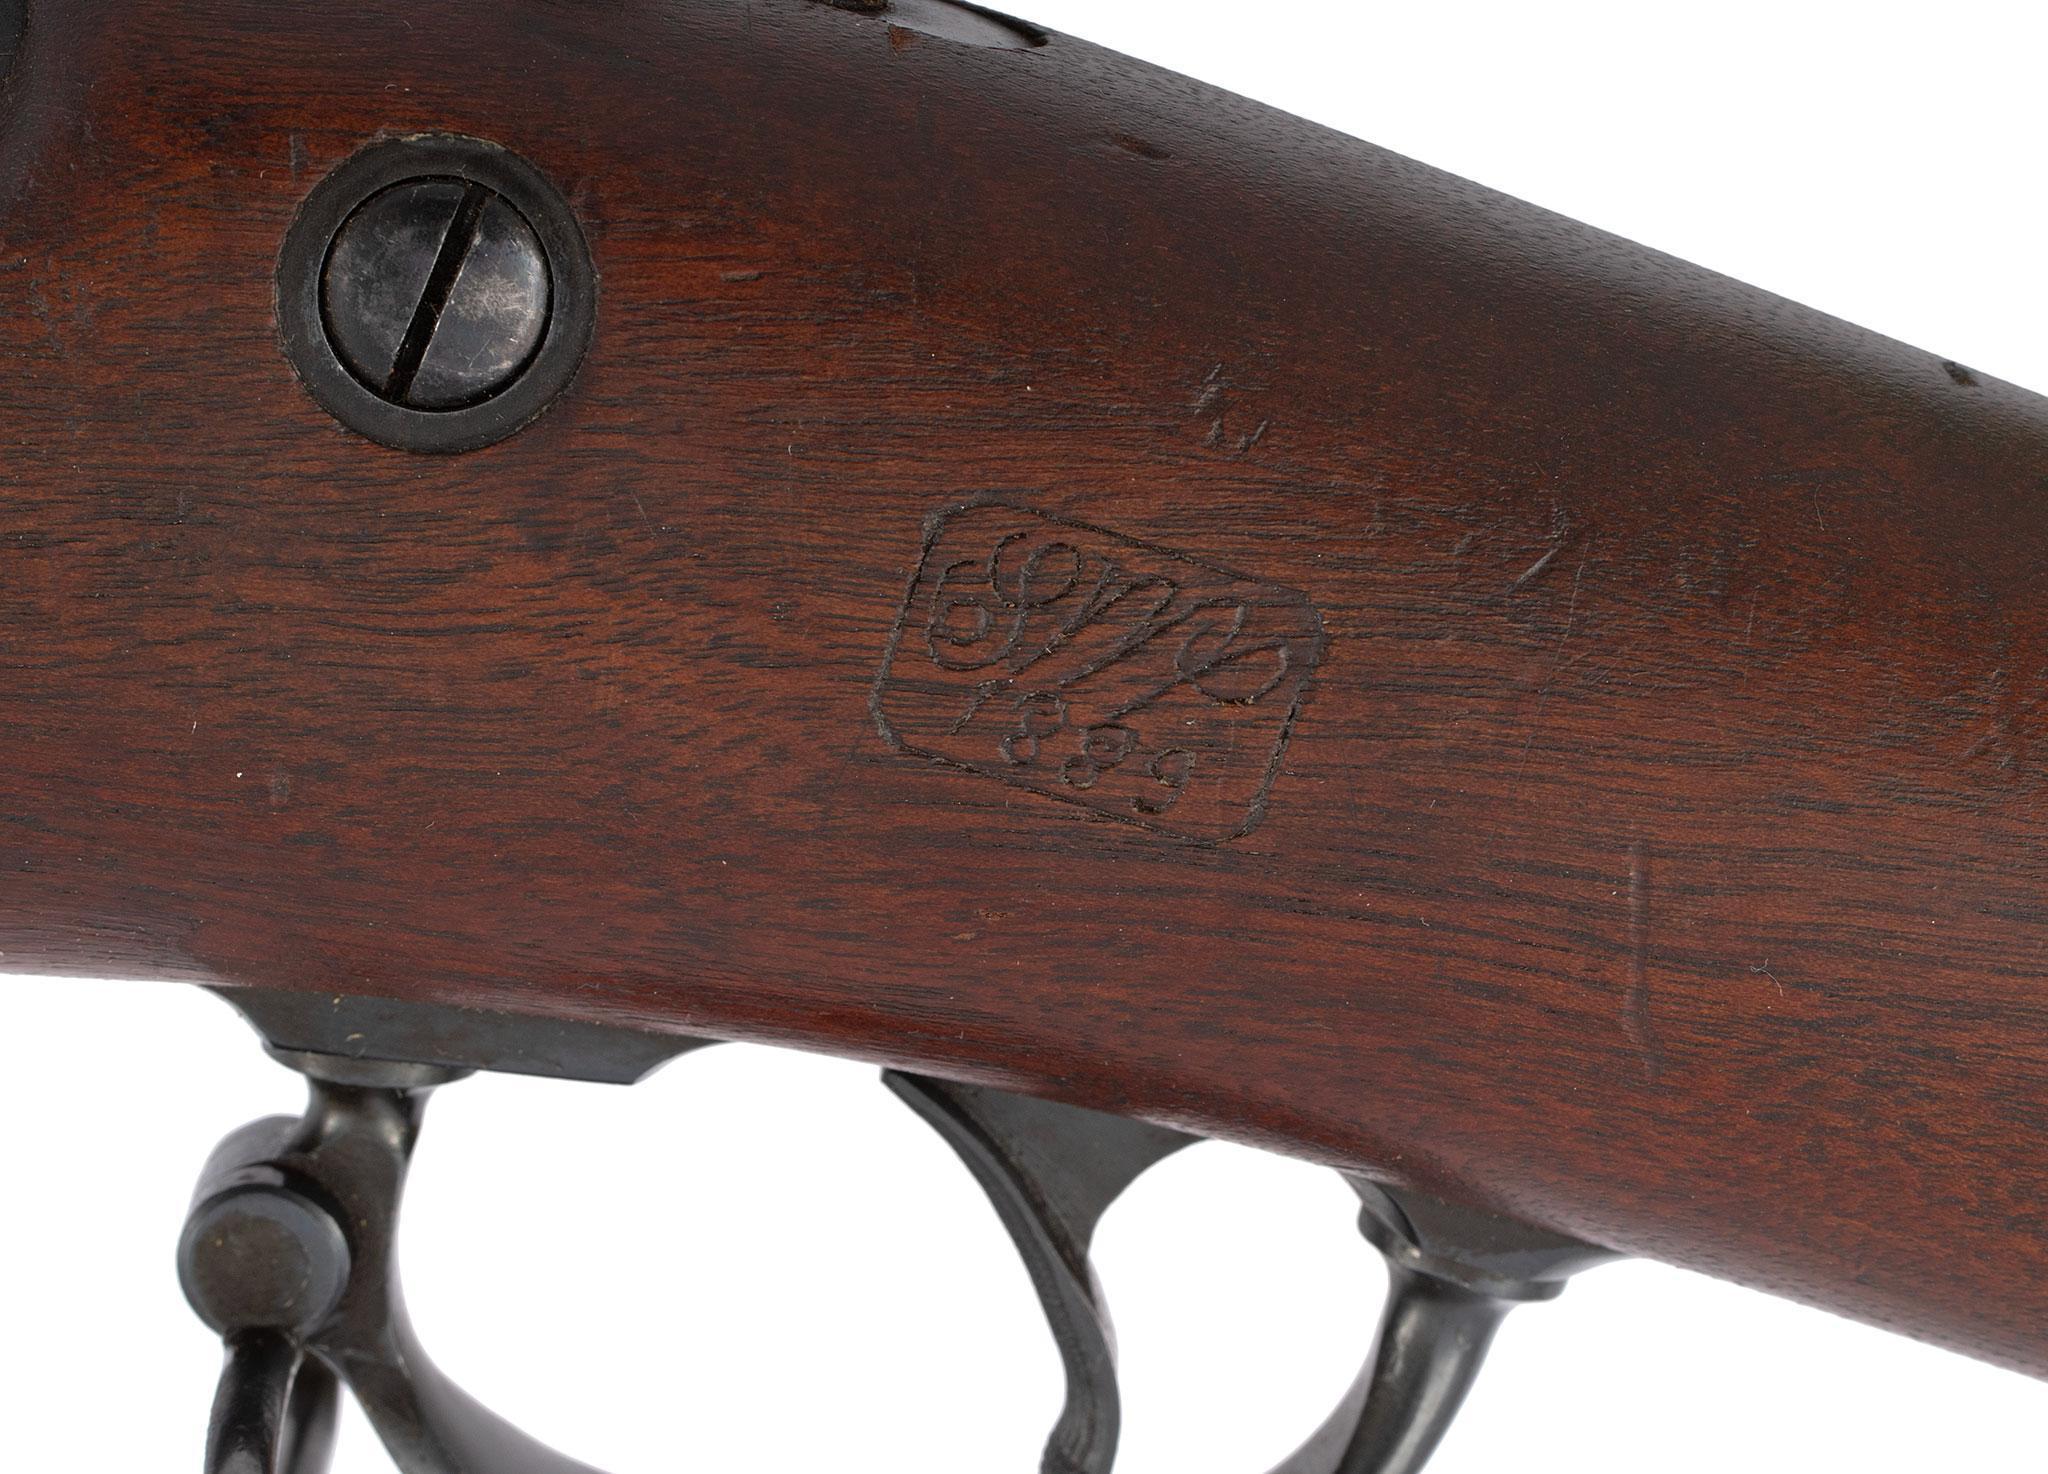 U.S. Model 1884 Trapdoor Springfield Rifle